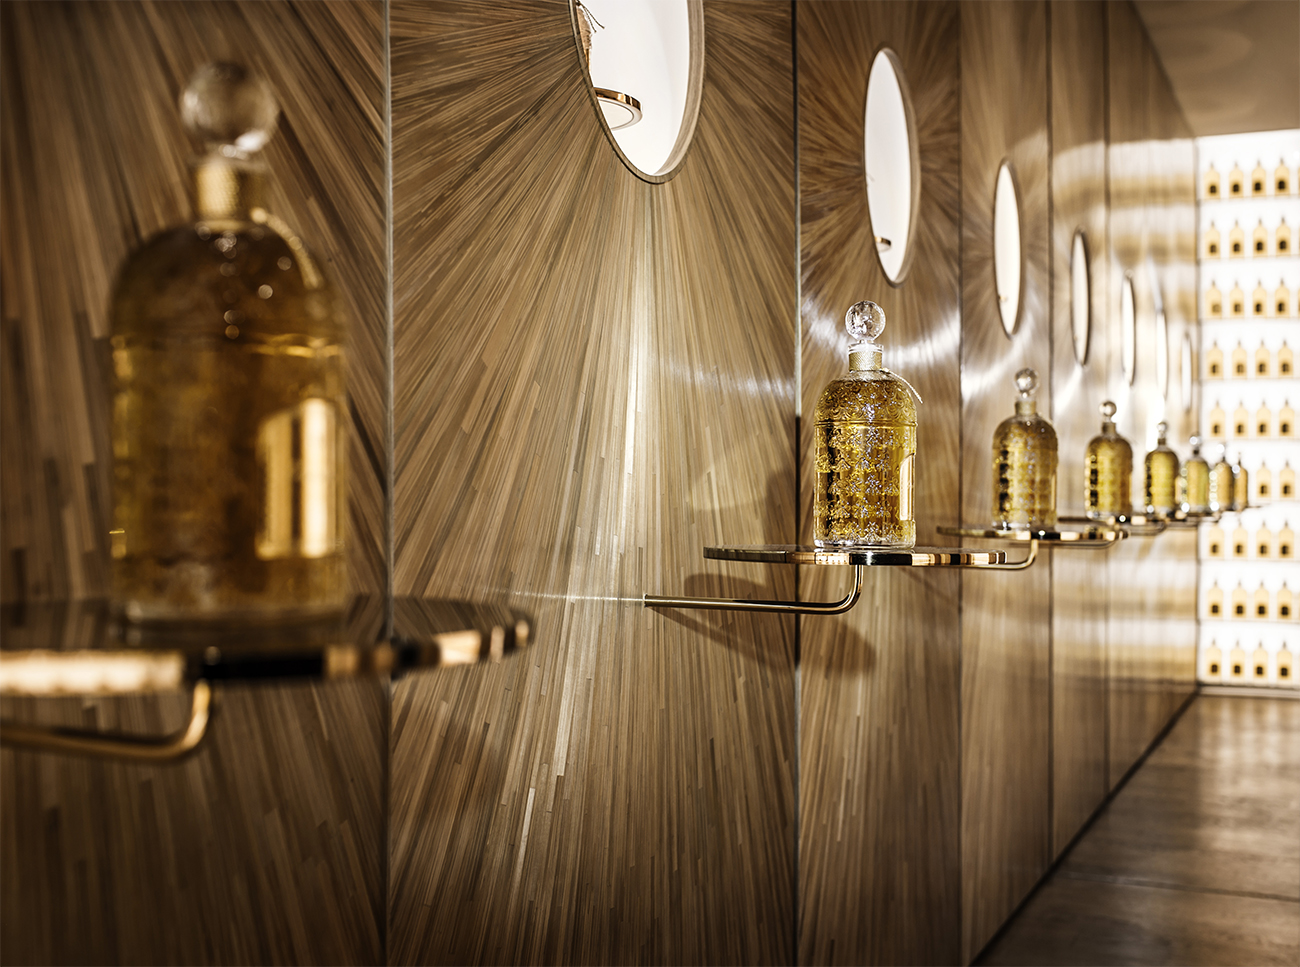  Maison Guerlain Perfumery by Peter Marino Architects 